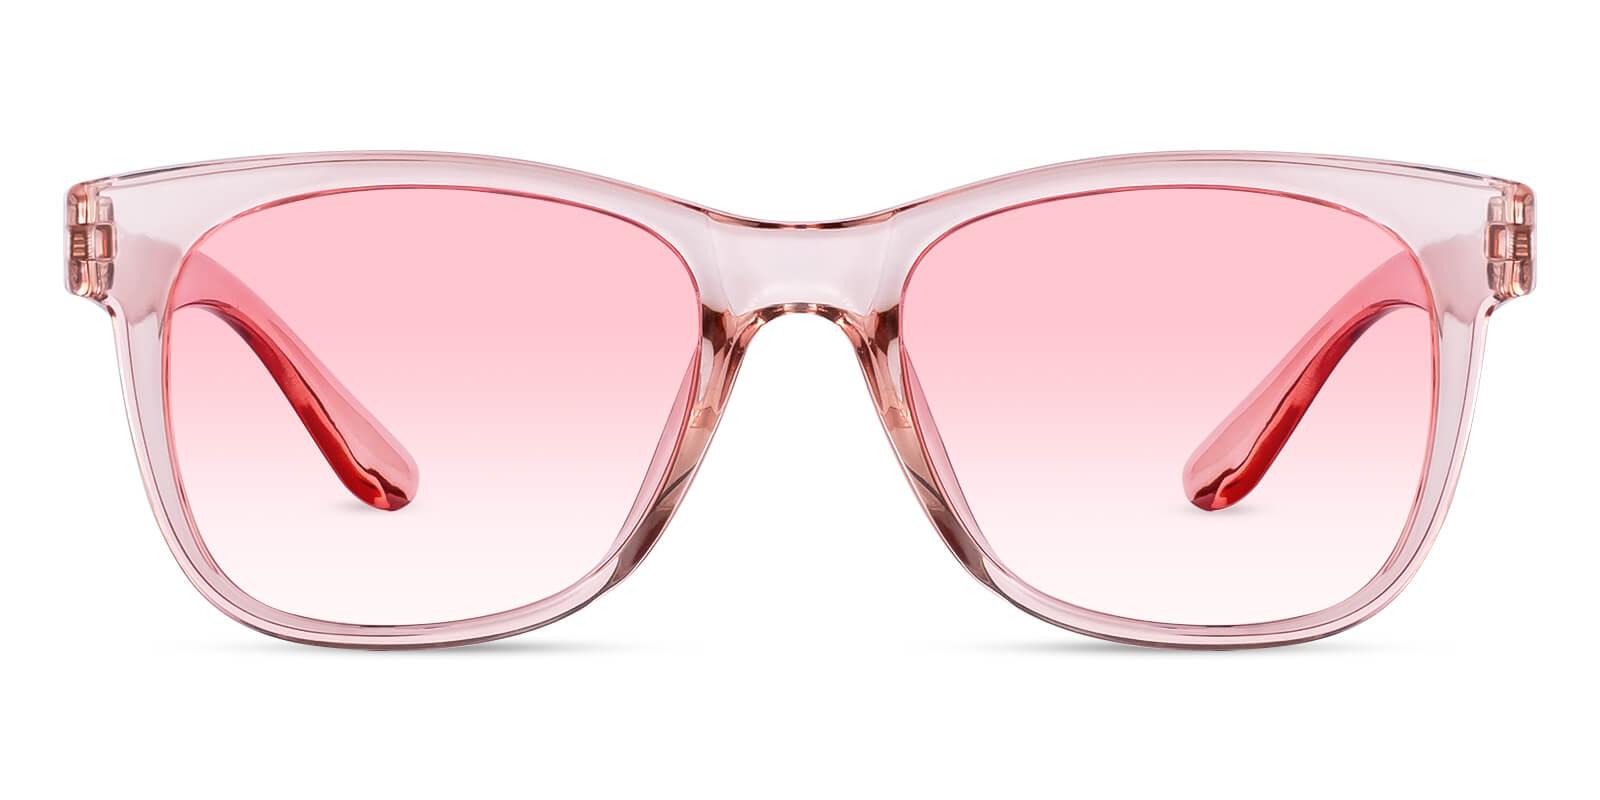 Symmetry Pink TR Sunglasses , UniversalBridgeFit Frames from ABBE Glasses